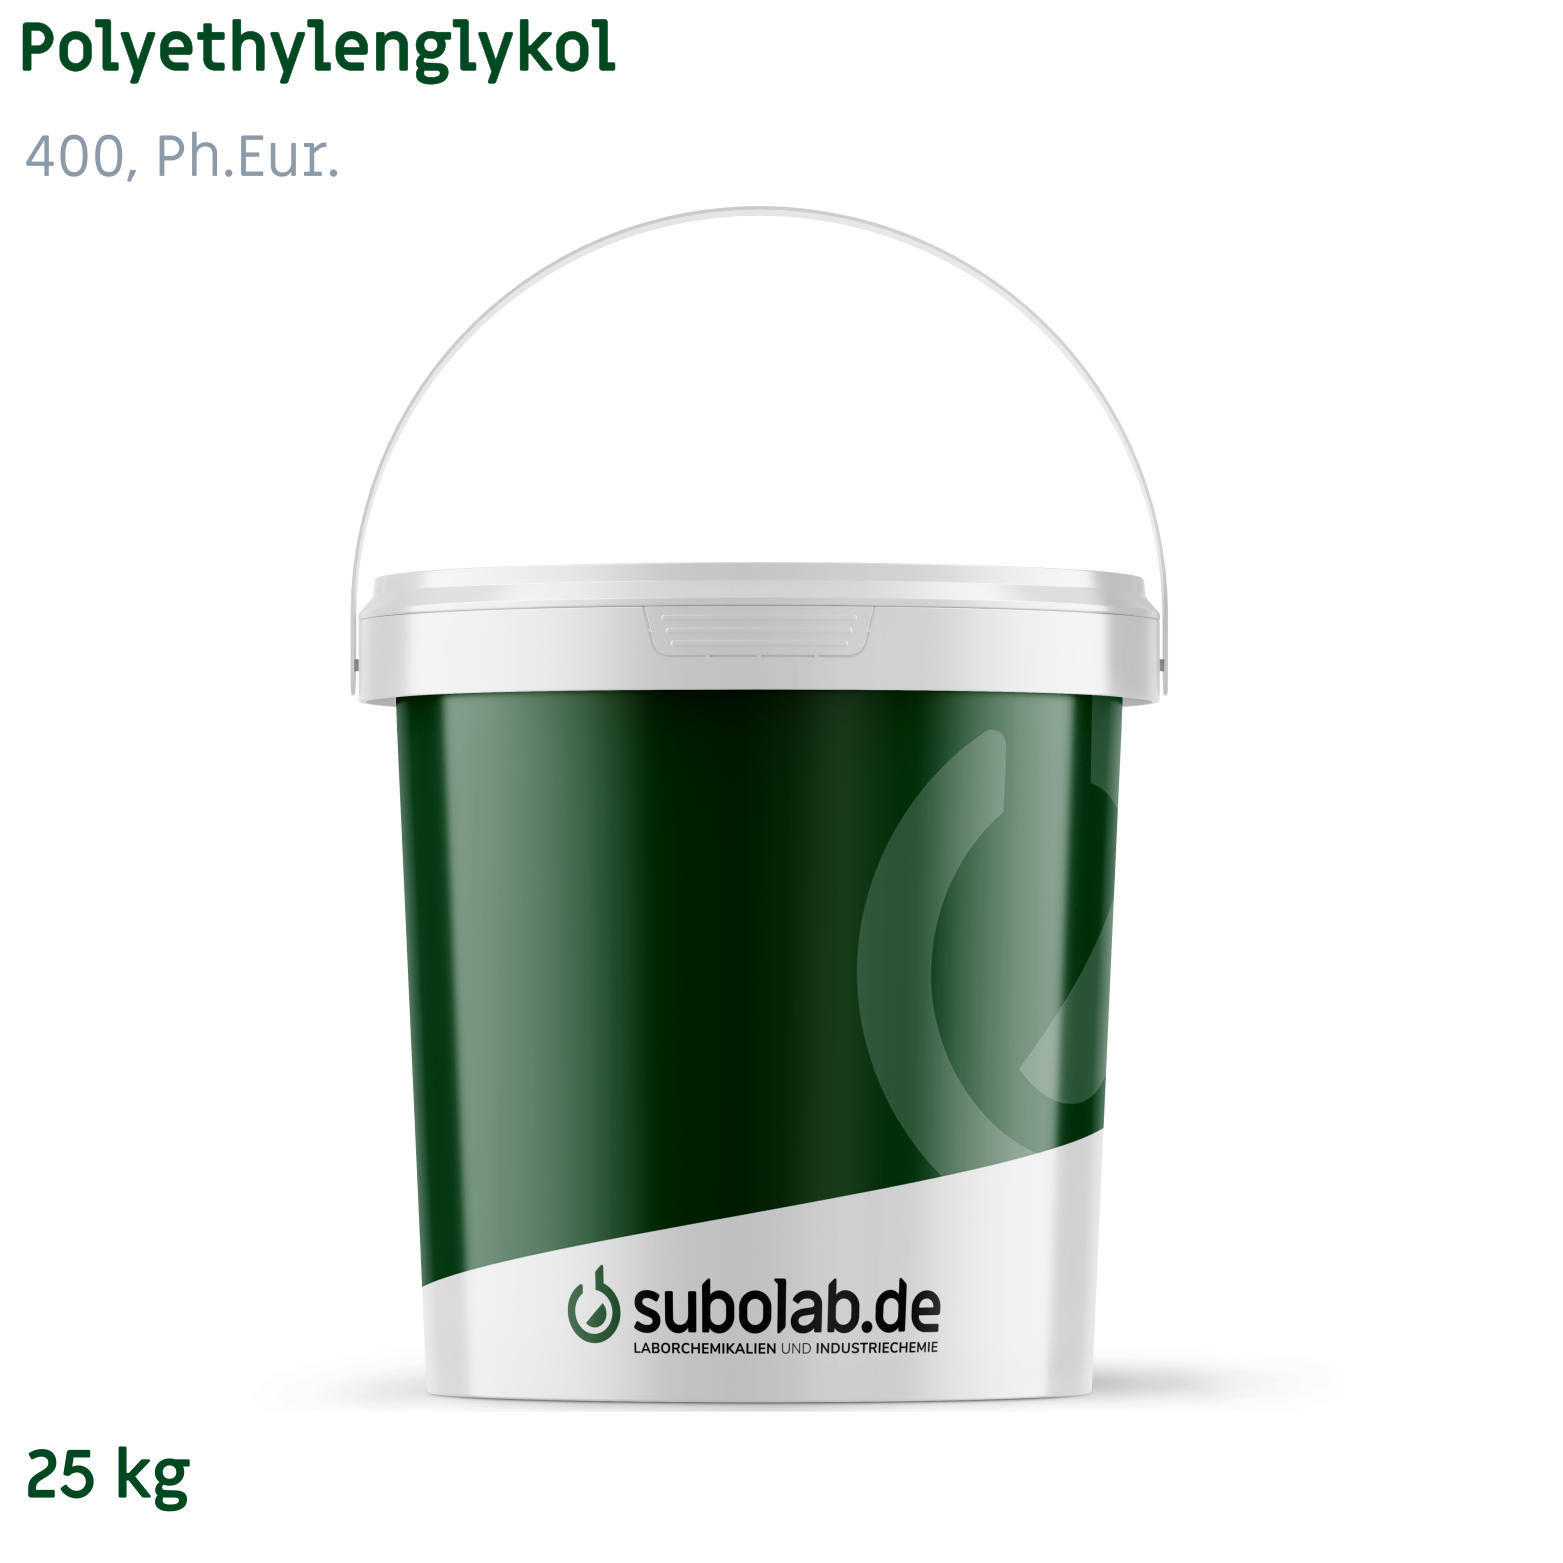 Bild von Polyethylenglykol 400, Ph.Eur. (25 kg)